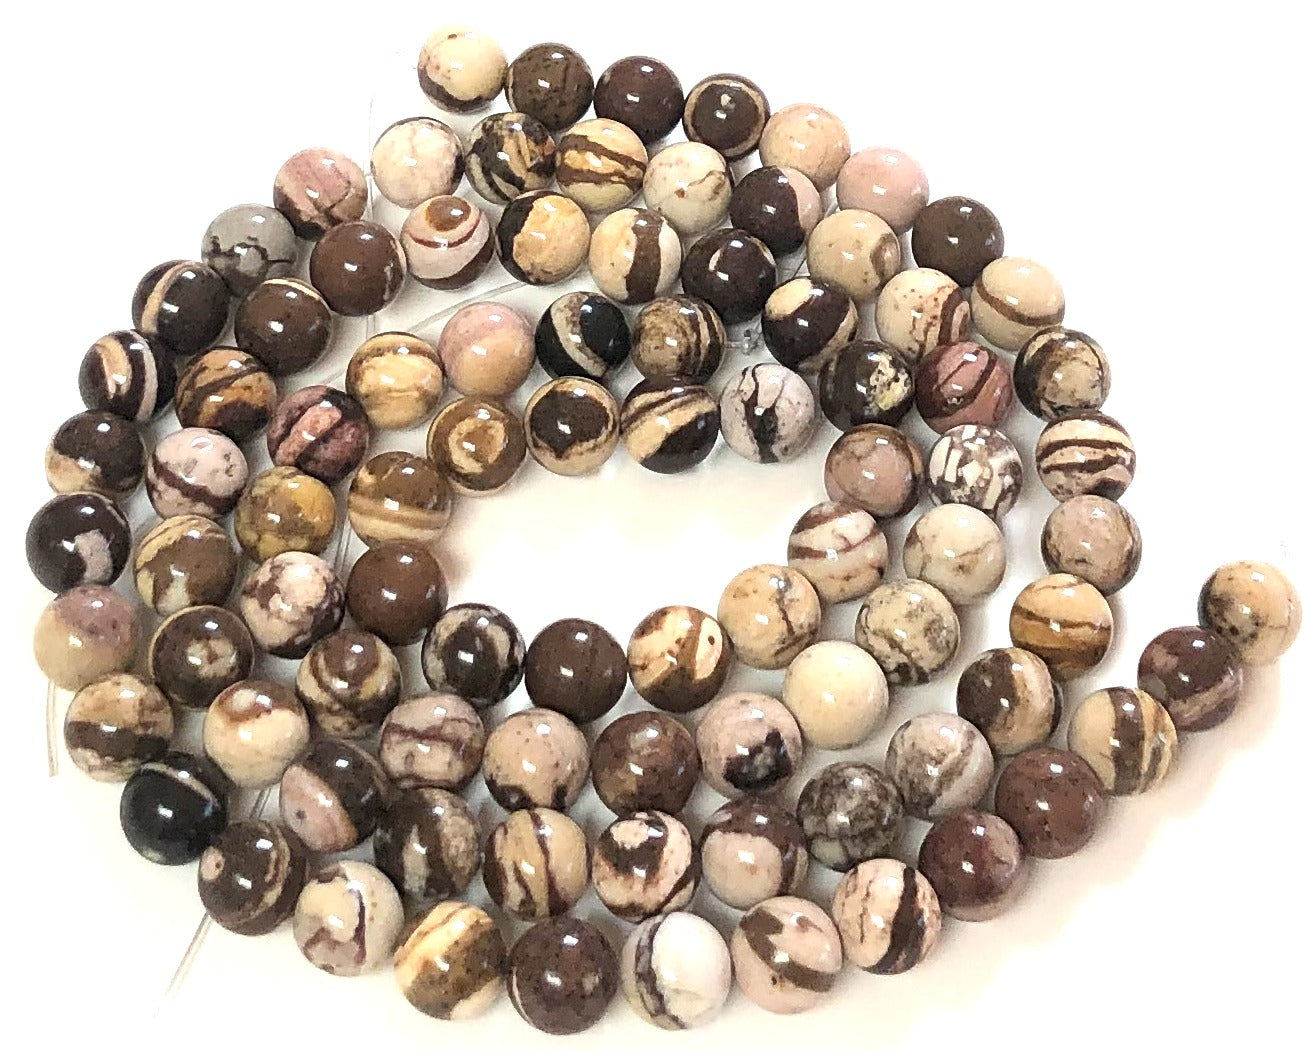 Australian Zebra Jasper 8mm round natural gemstone beads 15" strand - Oz Beads 